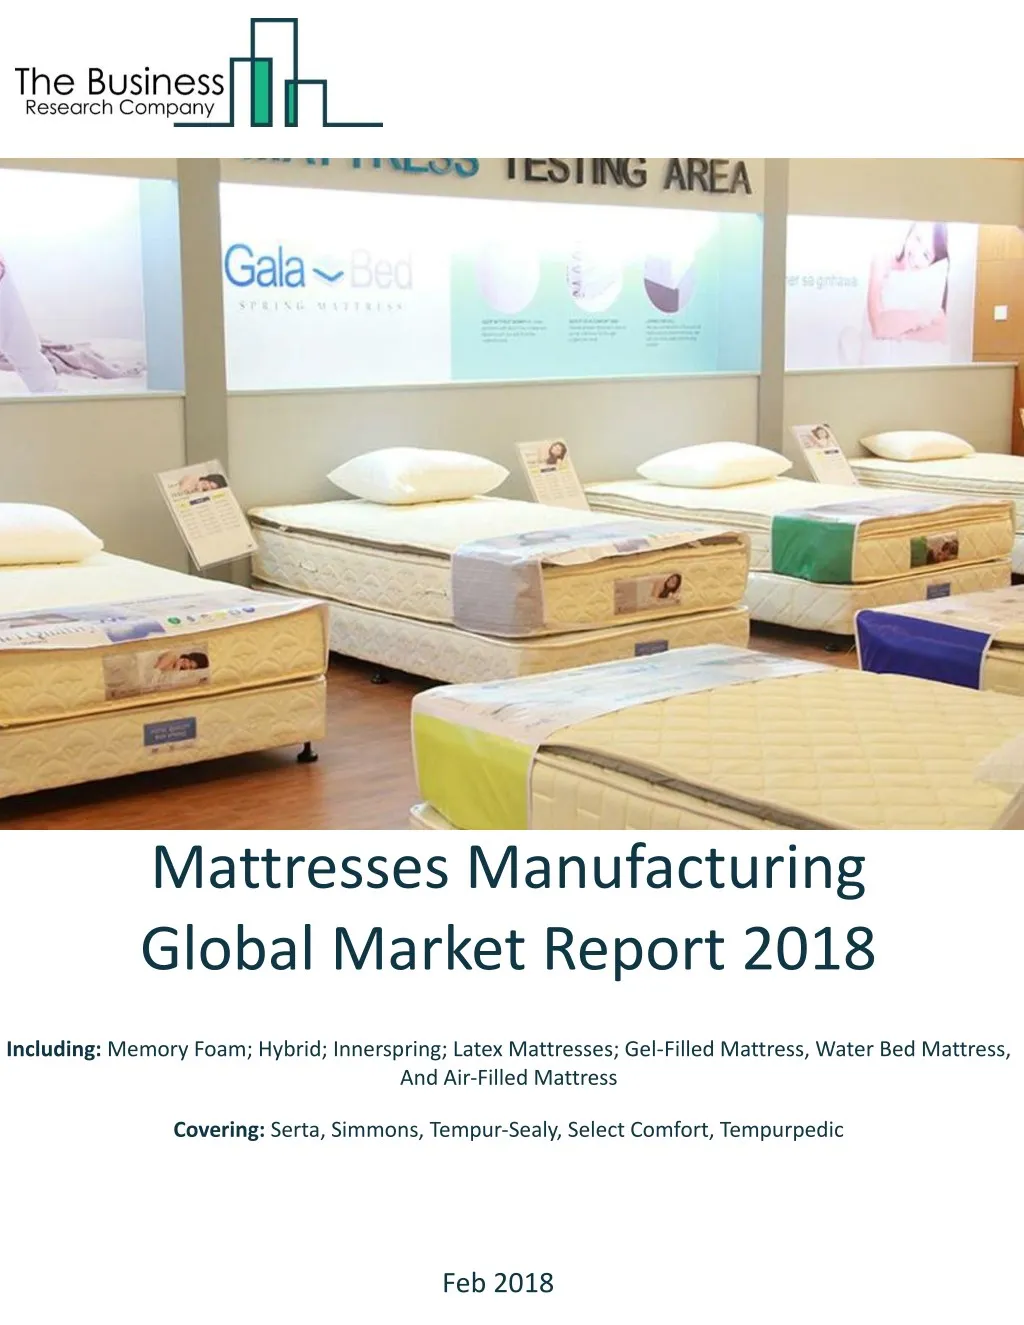 mattresses manufacturing global market report 2018